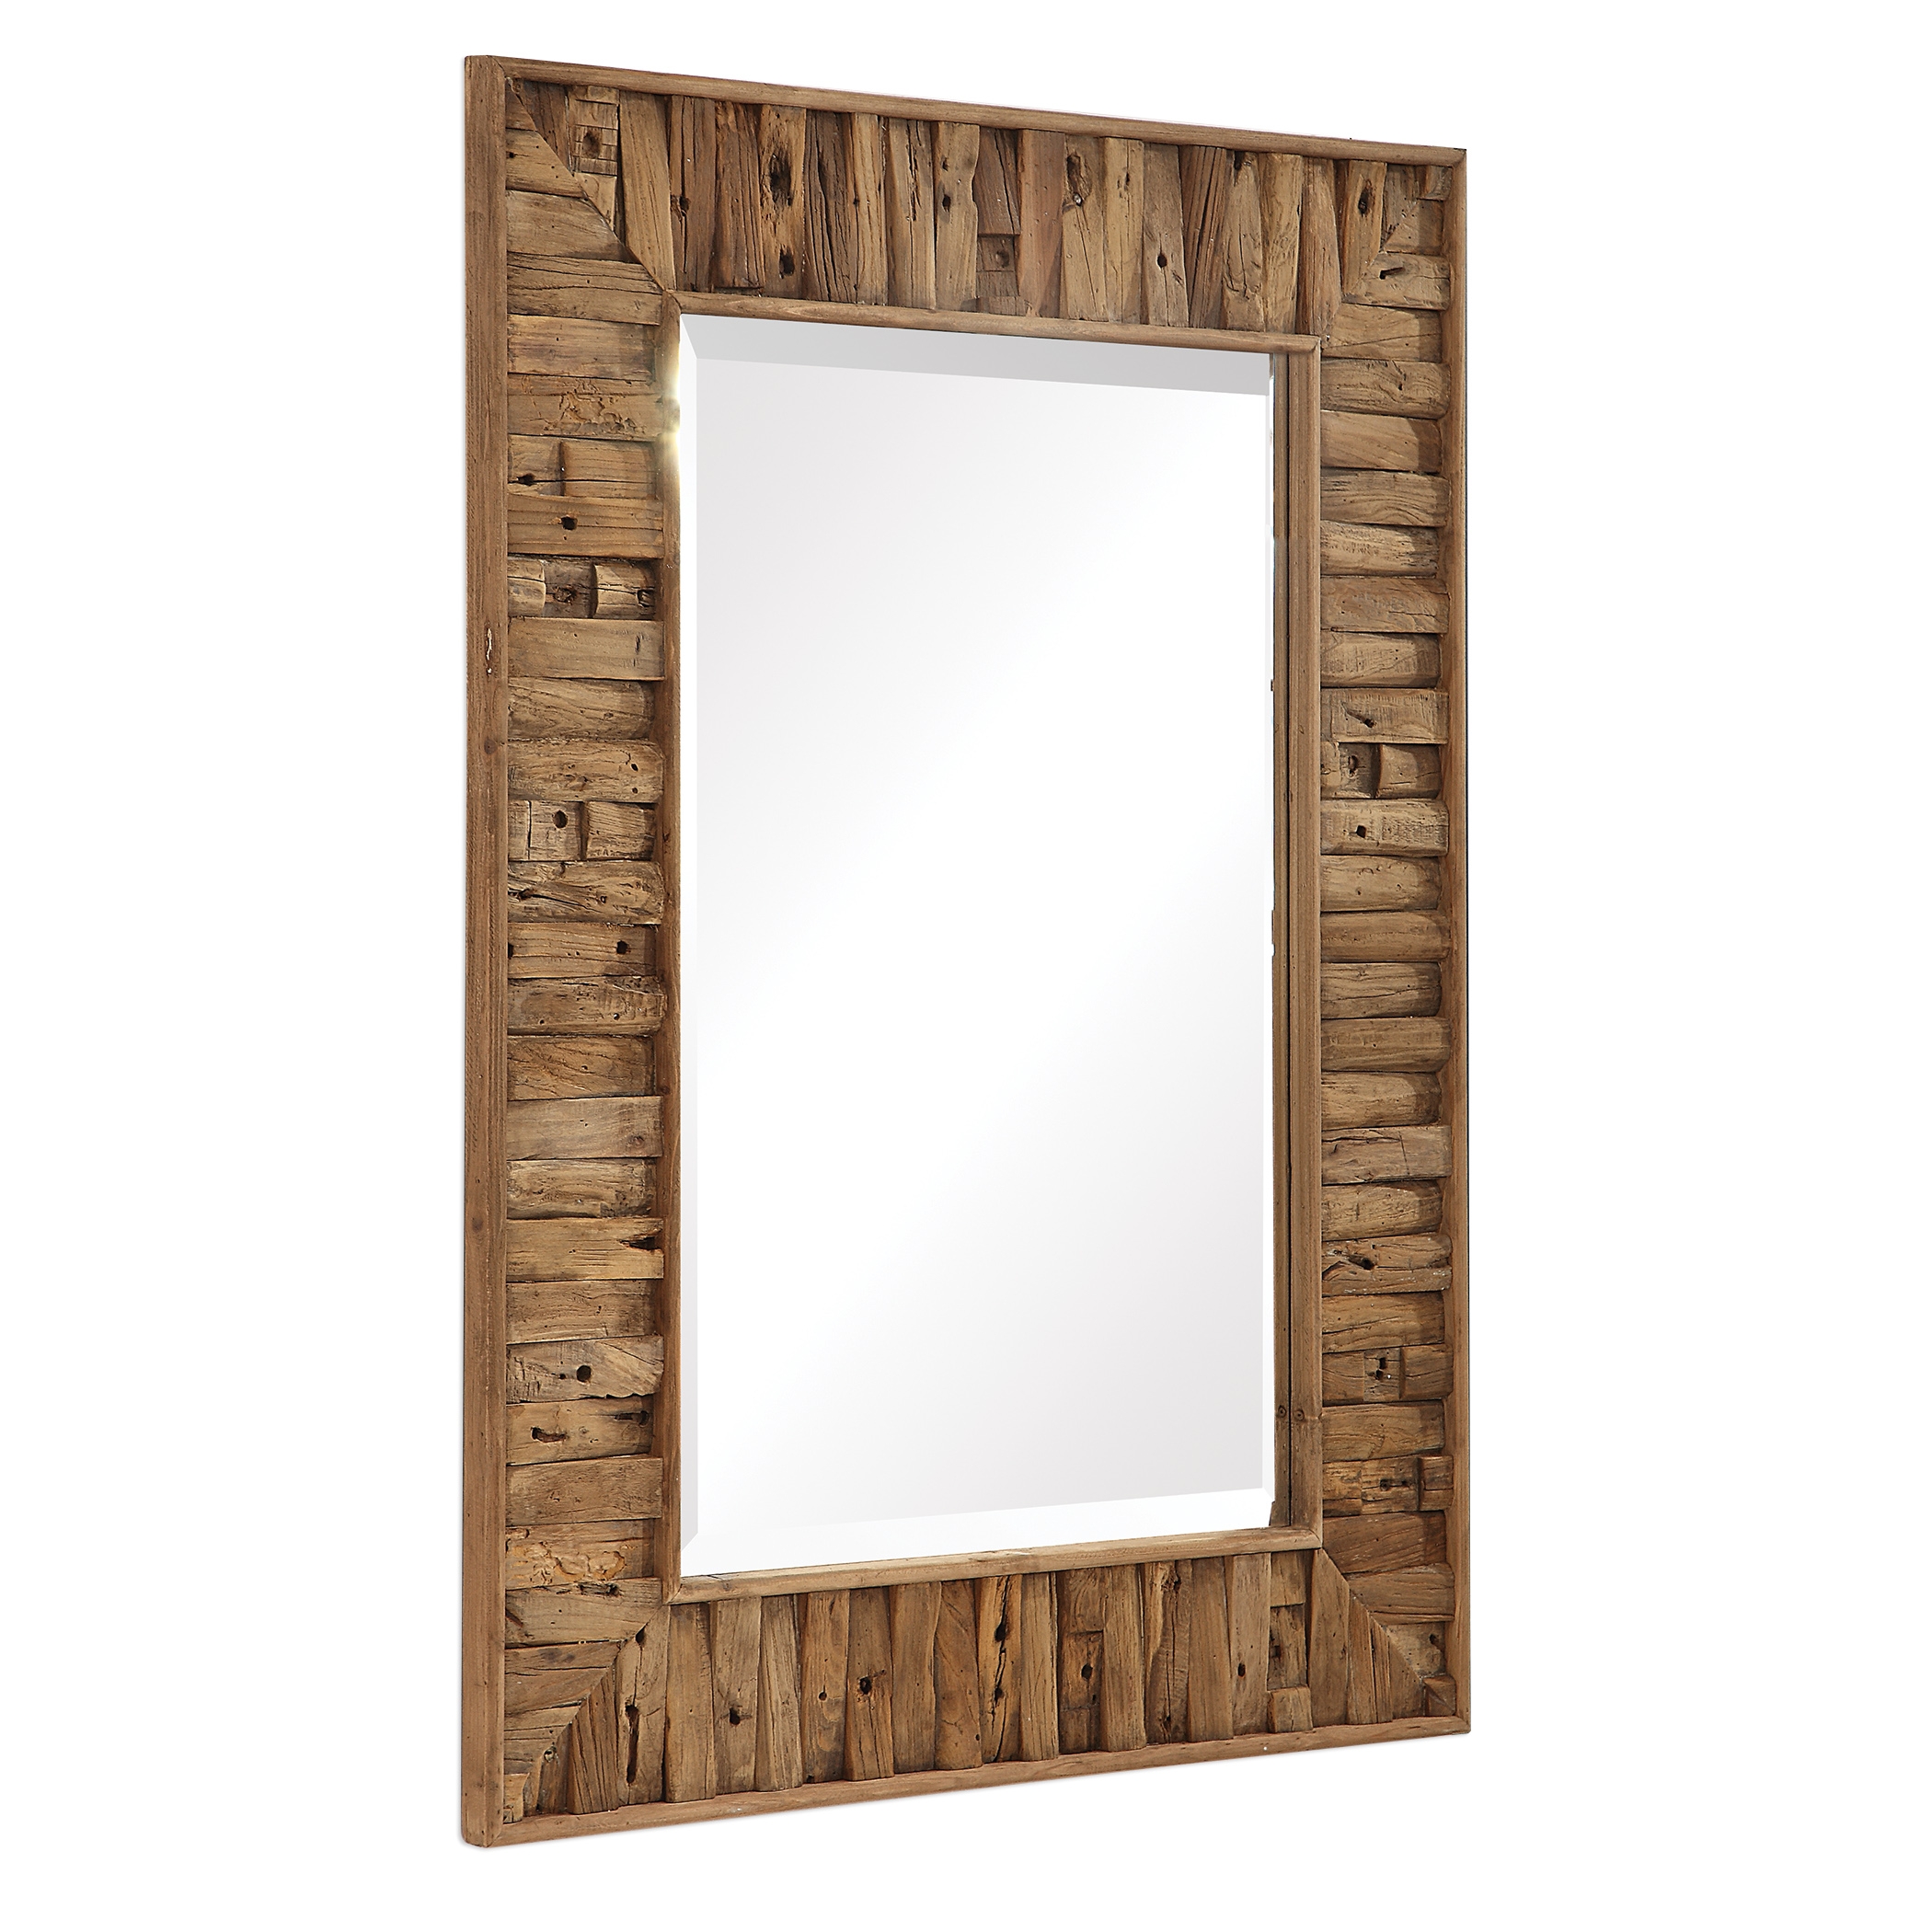 Nalani Reclaimed Wood Mirror - Image 3